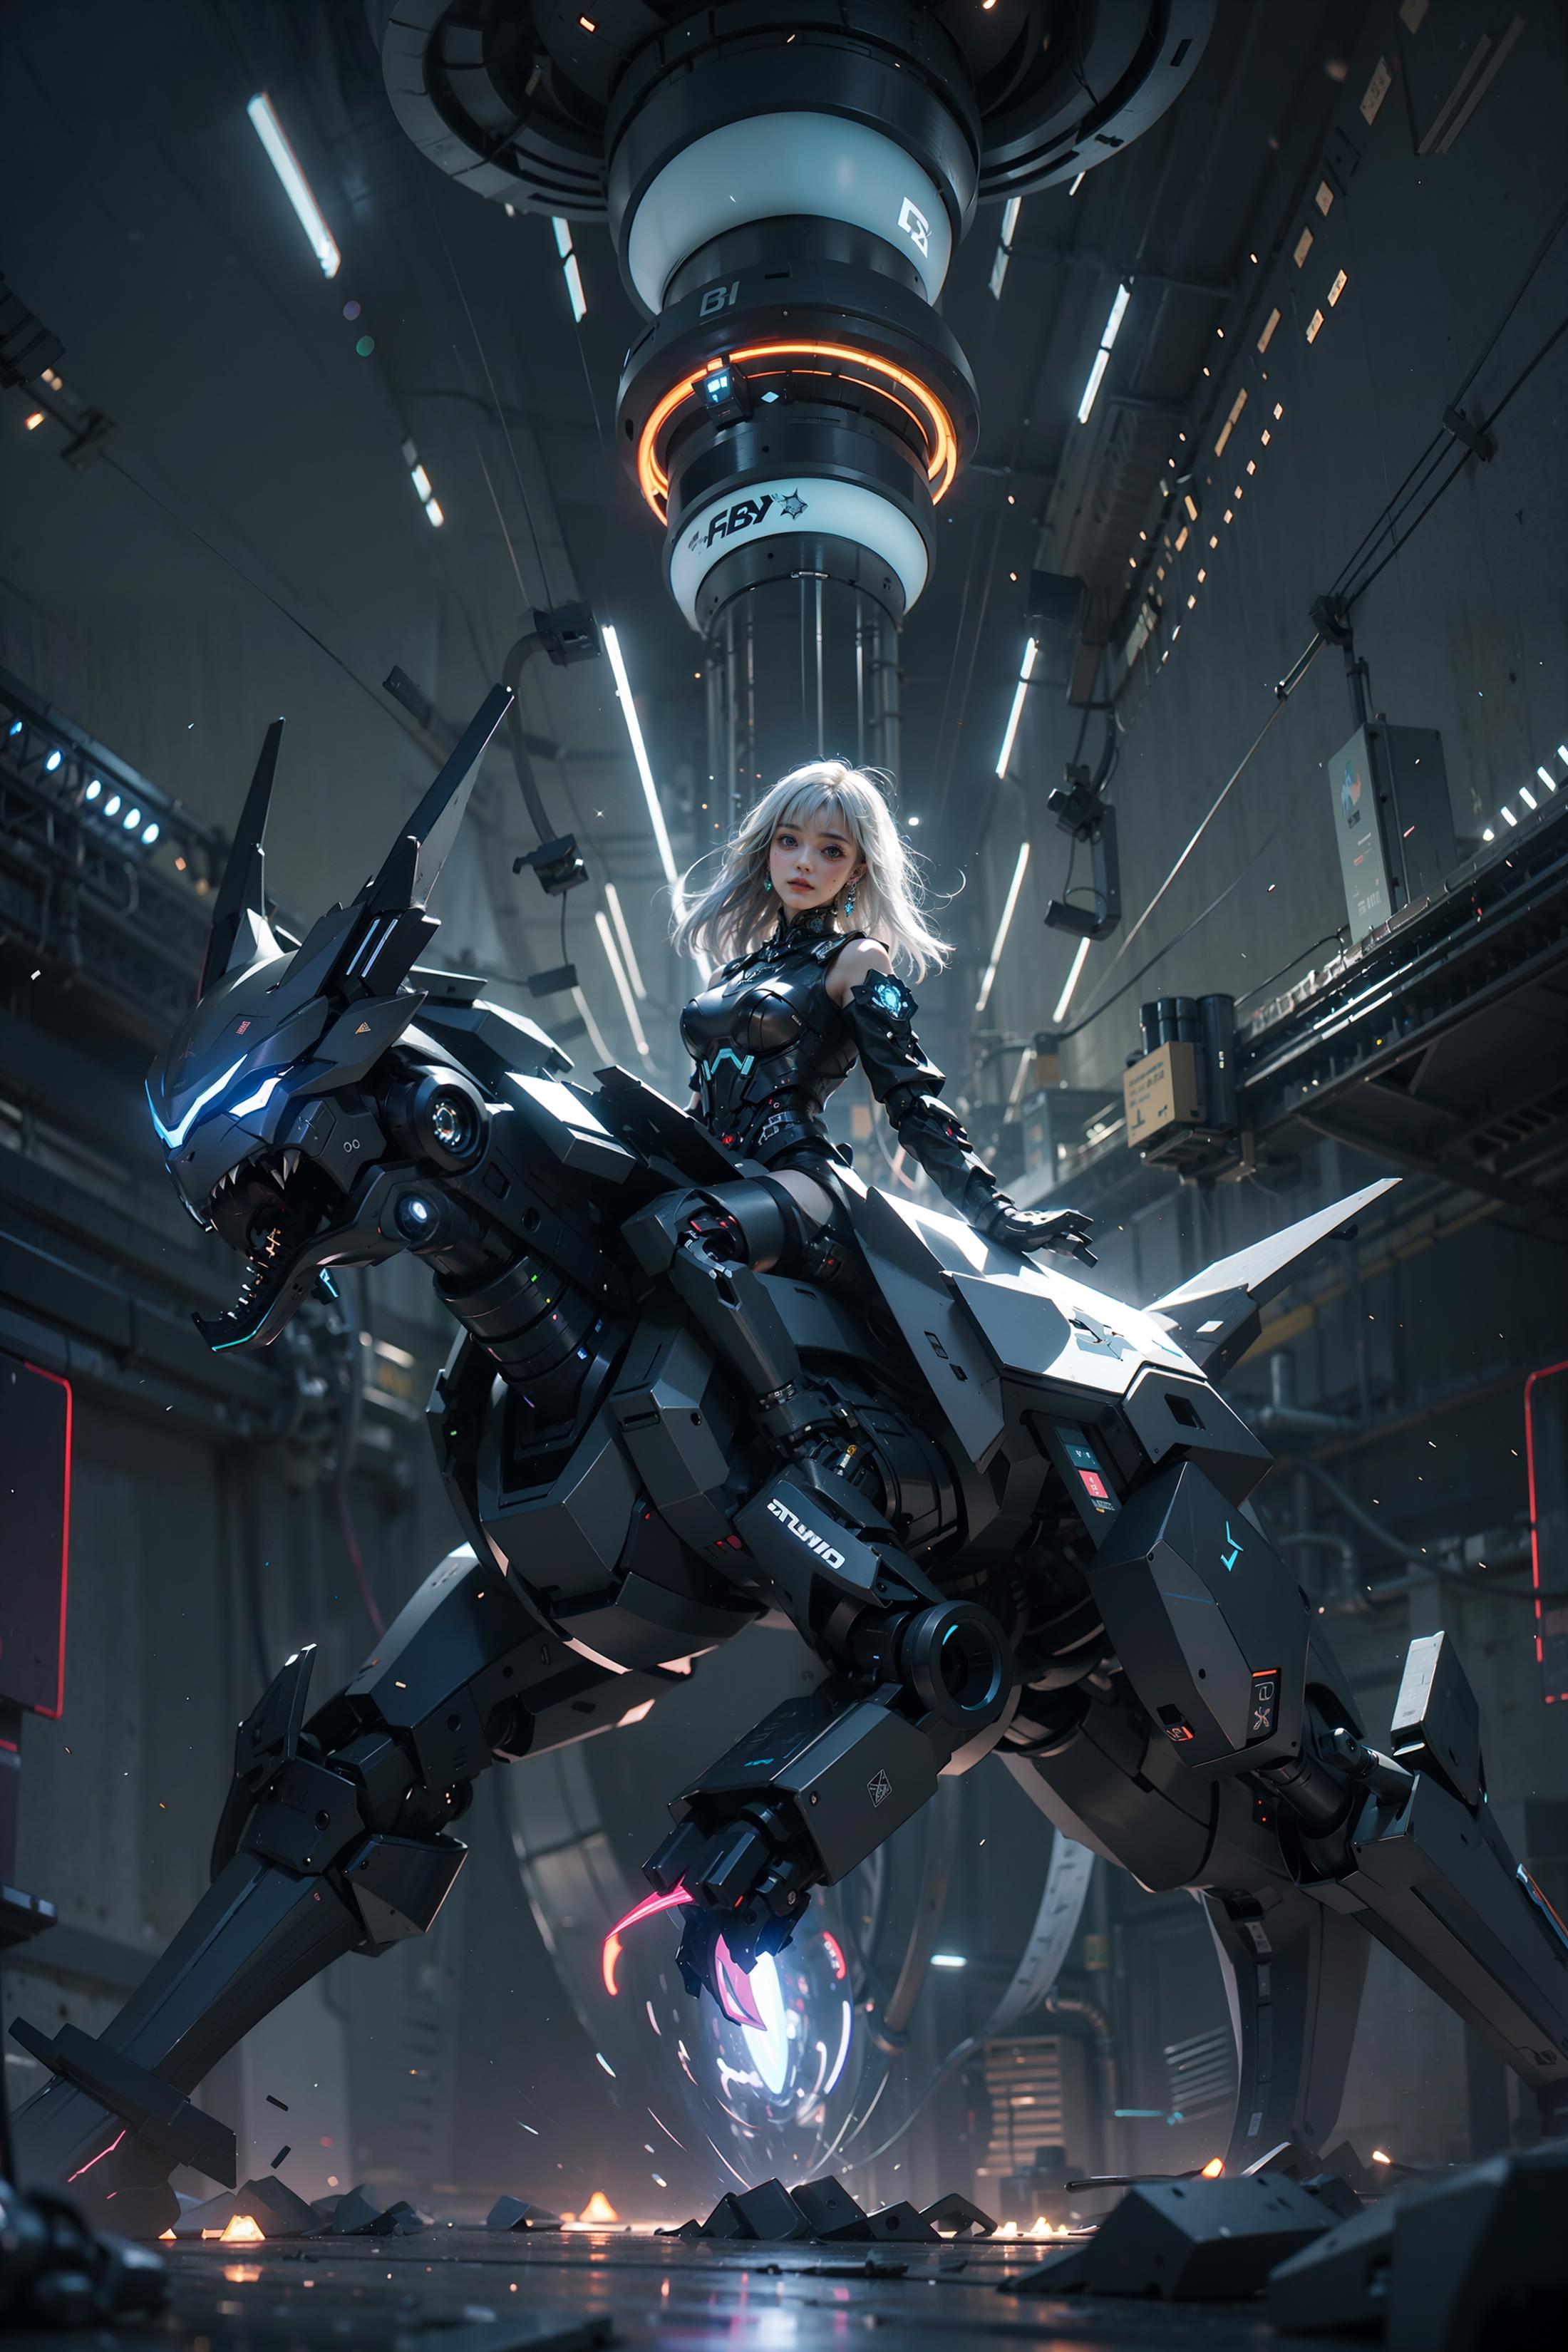 A woman riding a futuristic robotic horse in a futuristic city.